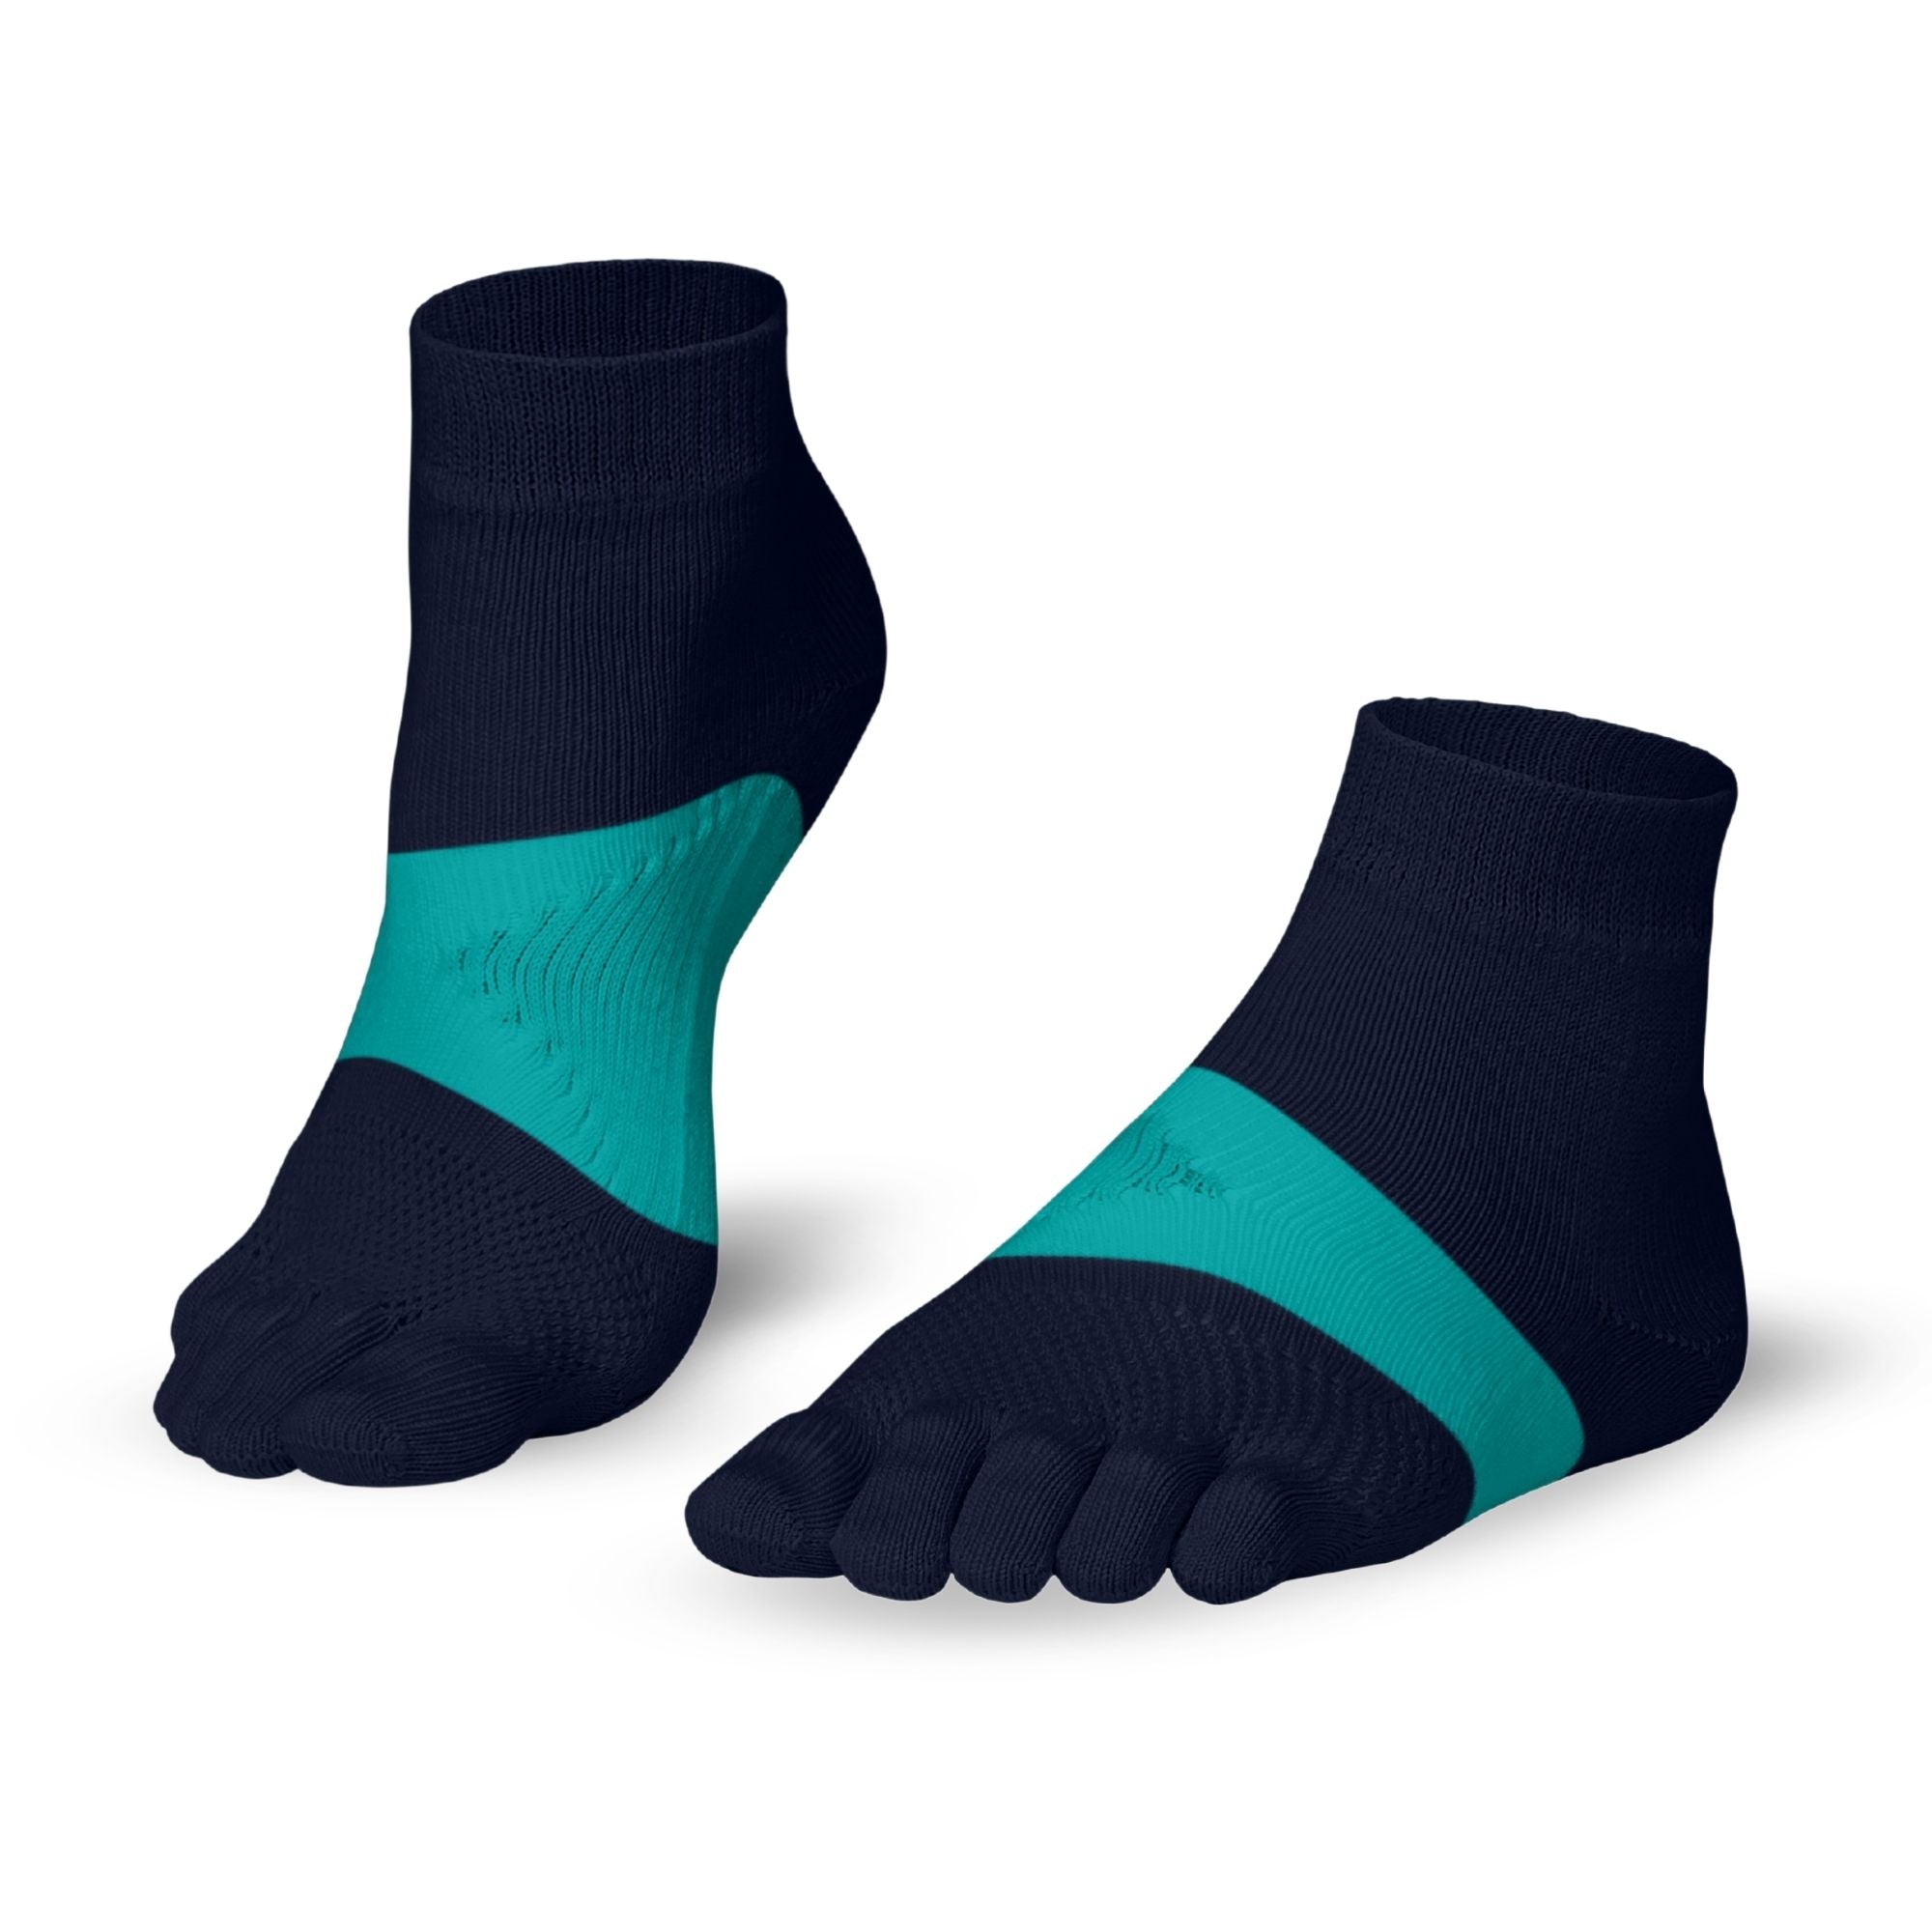 Knitido Marathon TS Running Toe Socks with In-Shoe Non-Slip